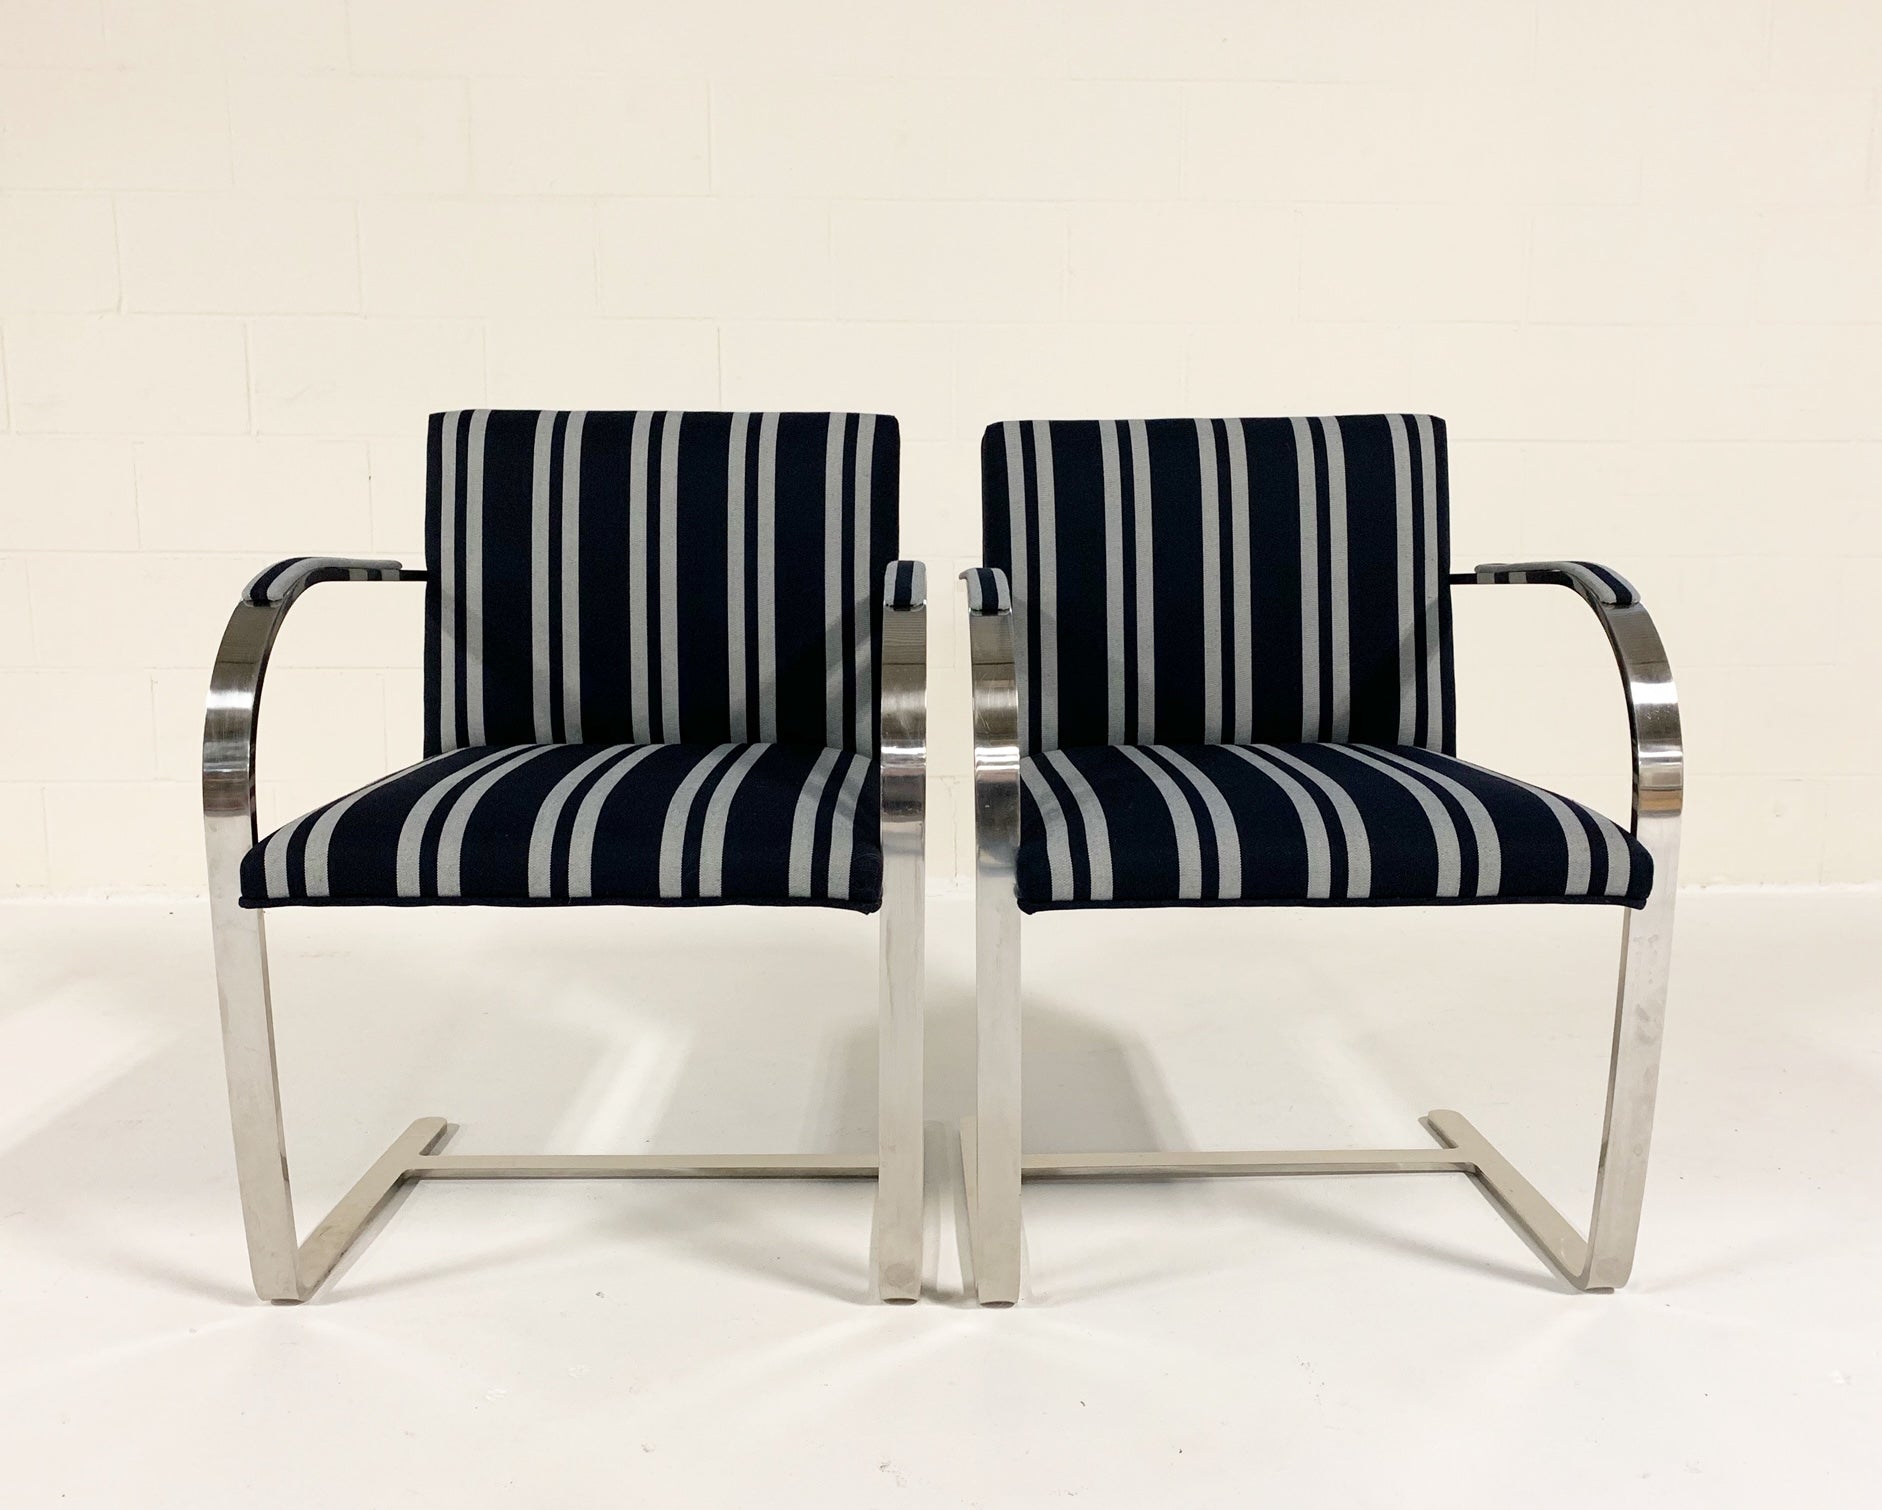 Ludwig Mies van der Rohe Brno Chairs, pair - FORSYTH